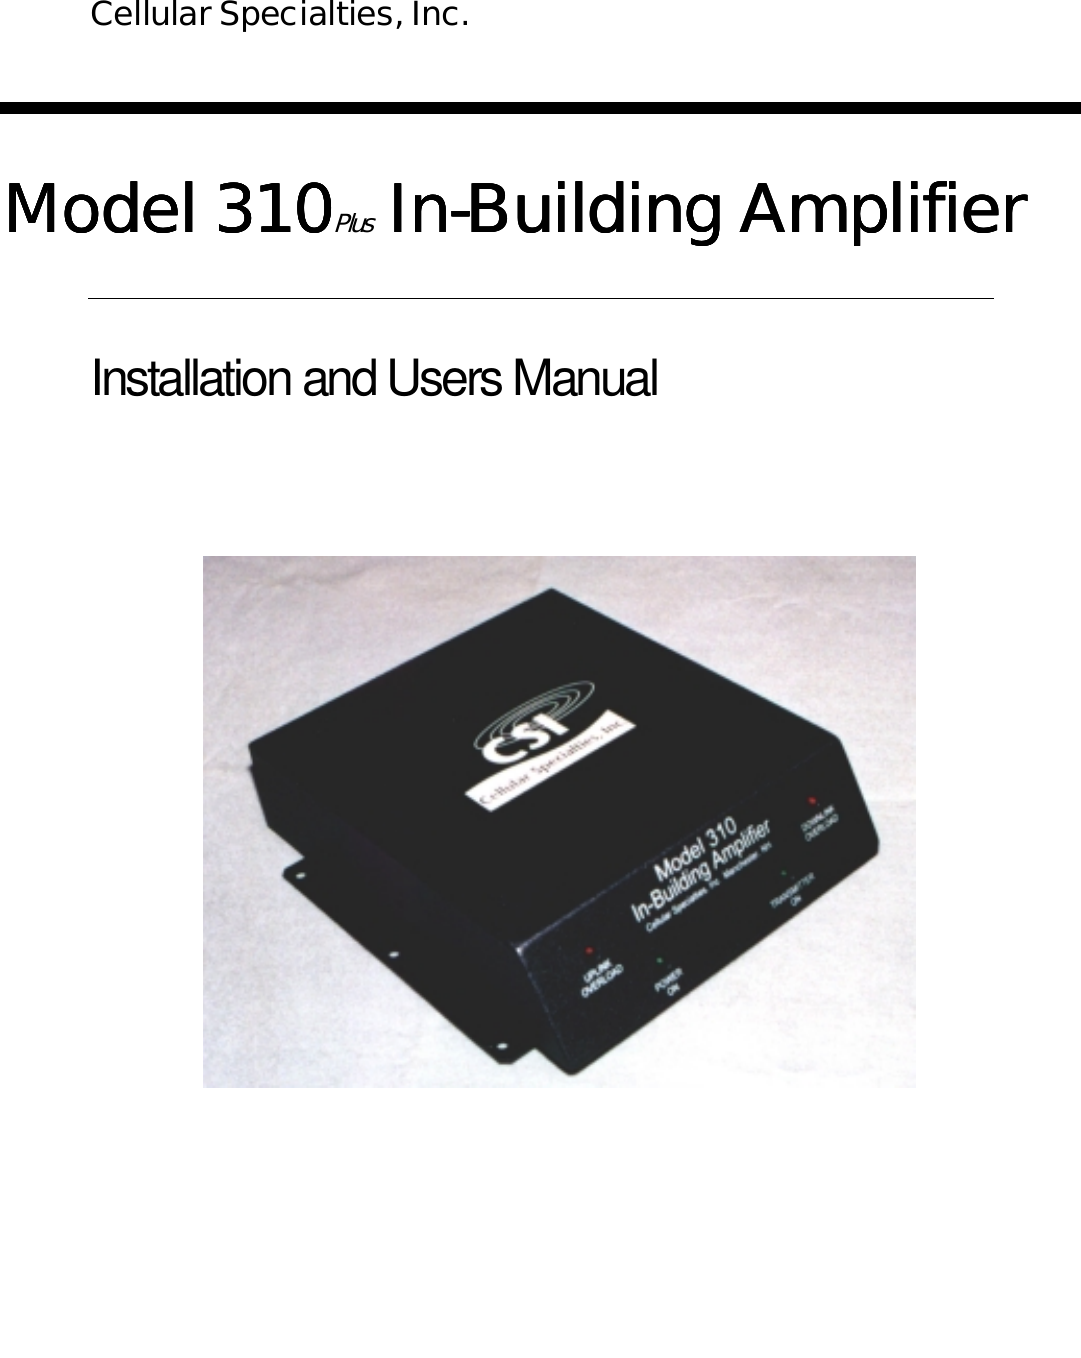 Model 310Model 310Model 310Model 310Plus In-Building Amplifier In-Building Amplifier In-Building Amplifier In-Building AmplifierInstallation and Users ManualCellular Specialties, Inc.